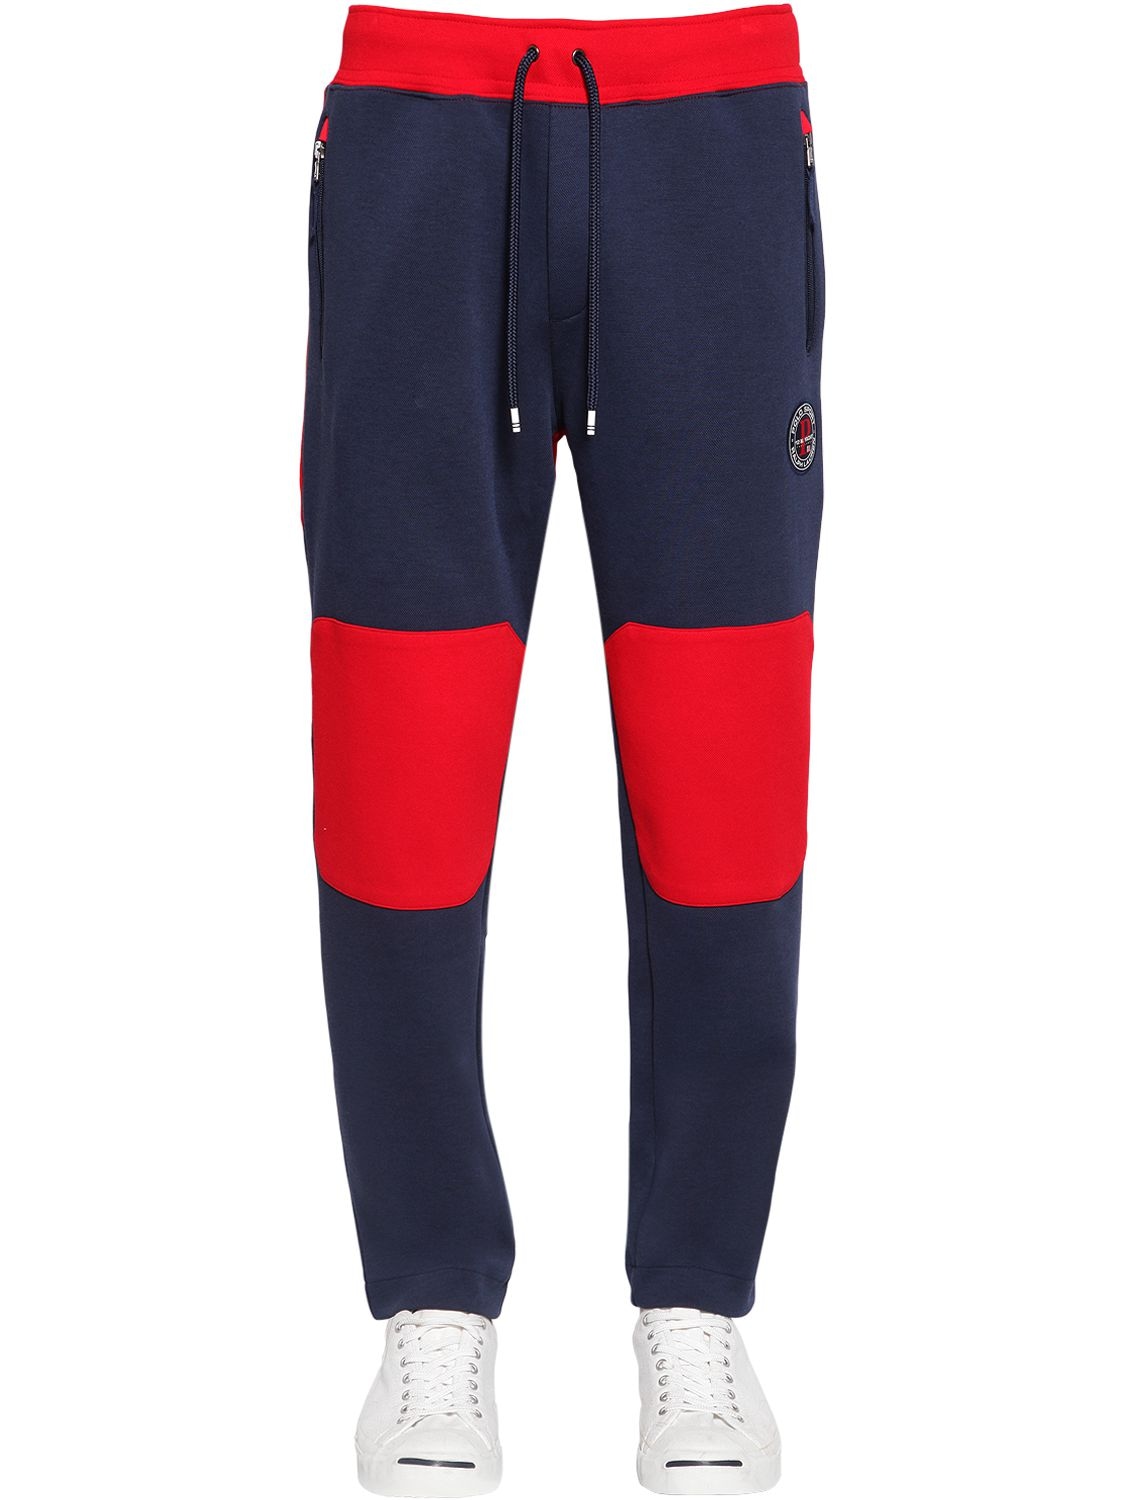 Polo Ralph Lauren P1 Color Block Nylon Pique Sweatpants In Navy,red